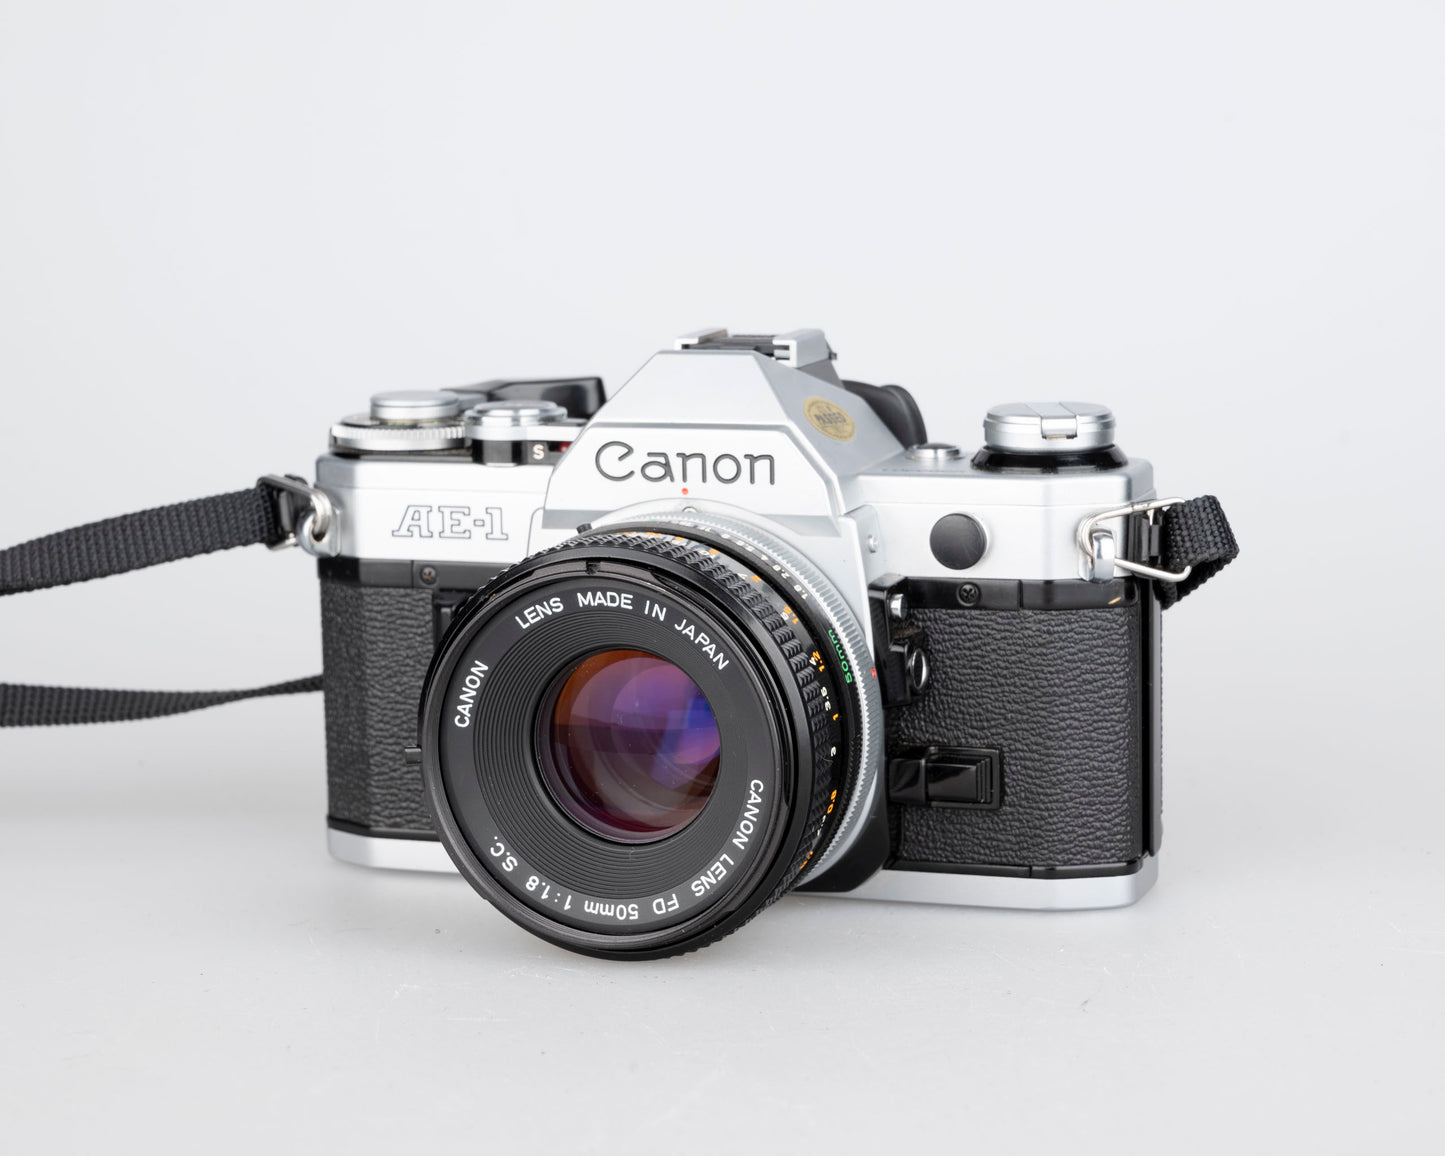 Canon AE-1 35mm SLR w/ Canon FD 50mm f1.8 lens + Speedlite 188A flash + original manual (serial 2388361)